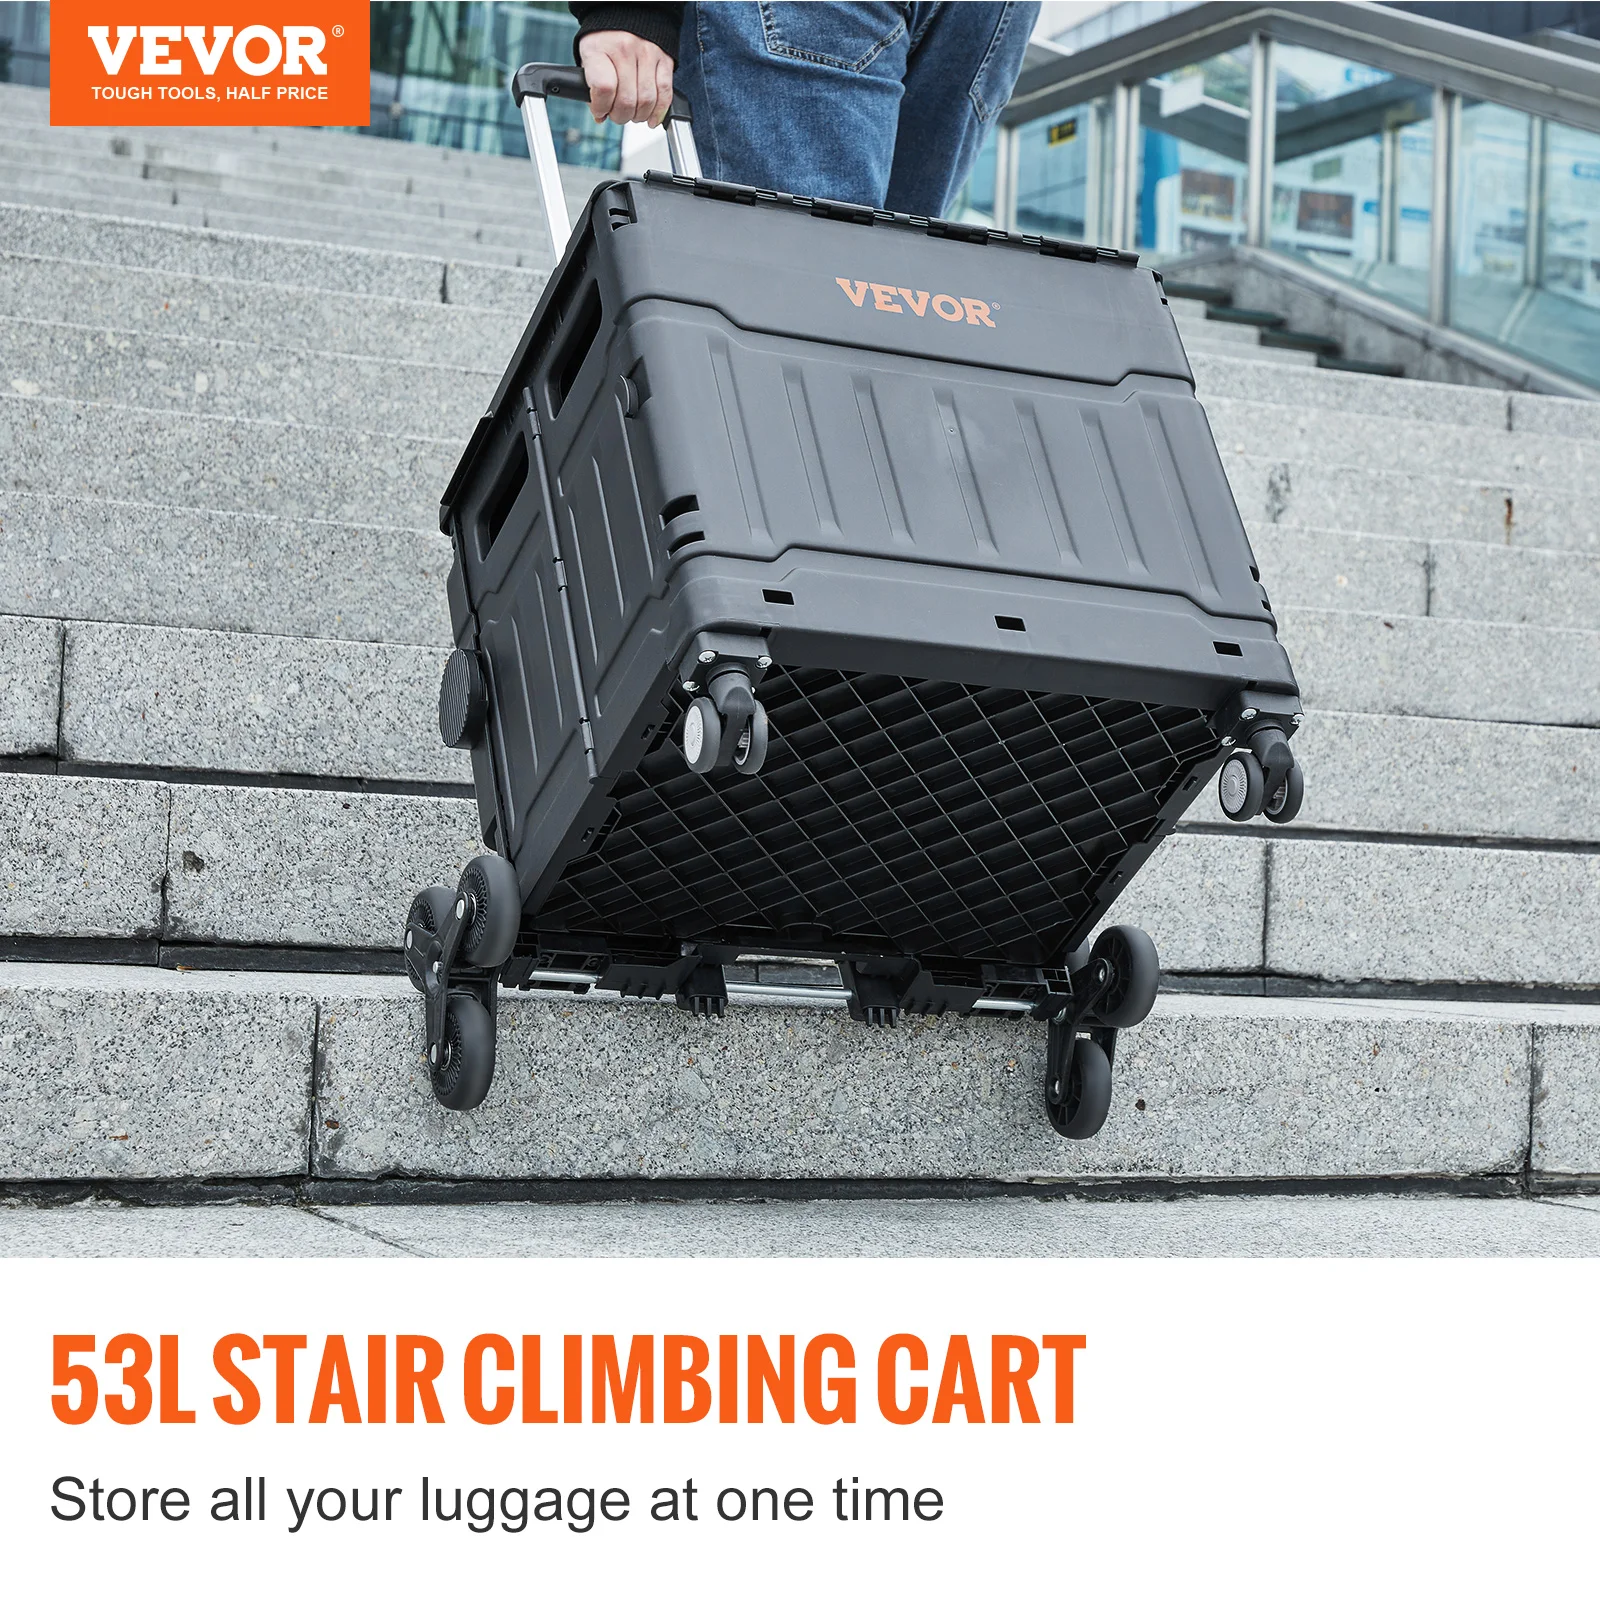 VEVOR-Stair-Climbing-Cart-155lbs-Outdoor-Camping-Trolley-Shopping-Cart-Portable-Rolling-Crate-Handcart-W-Telescoping-1